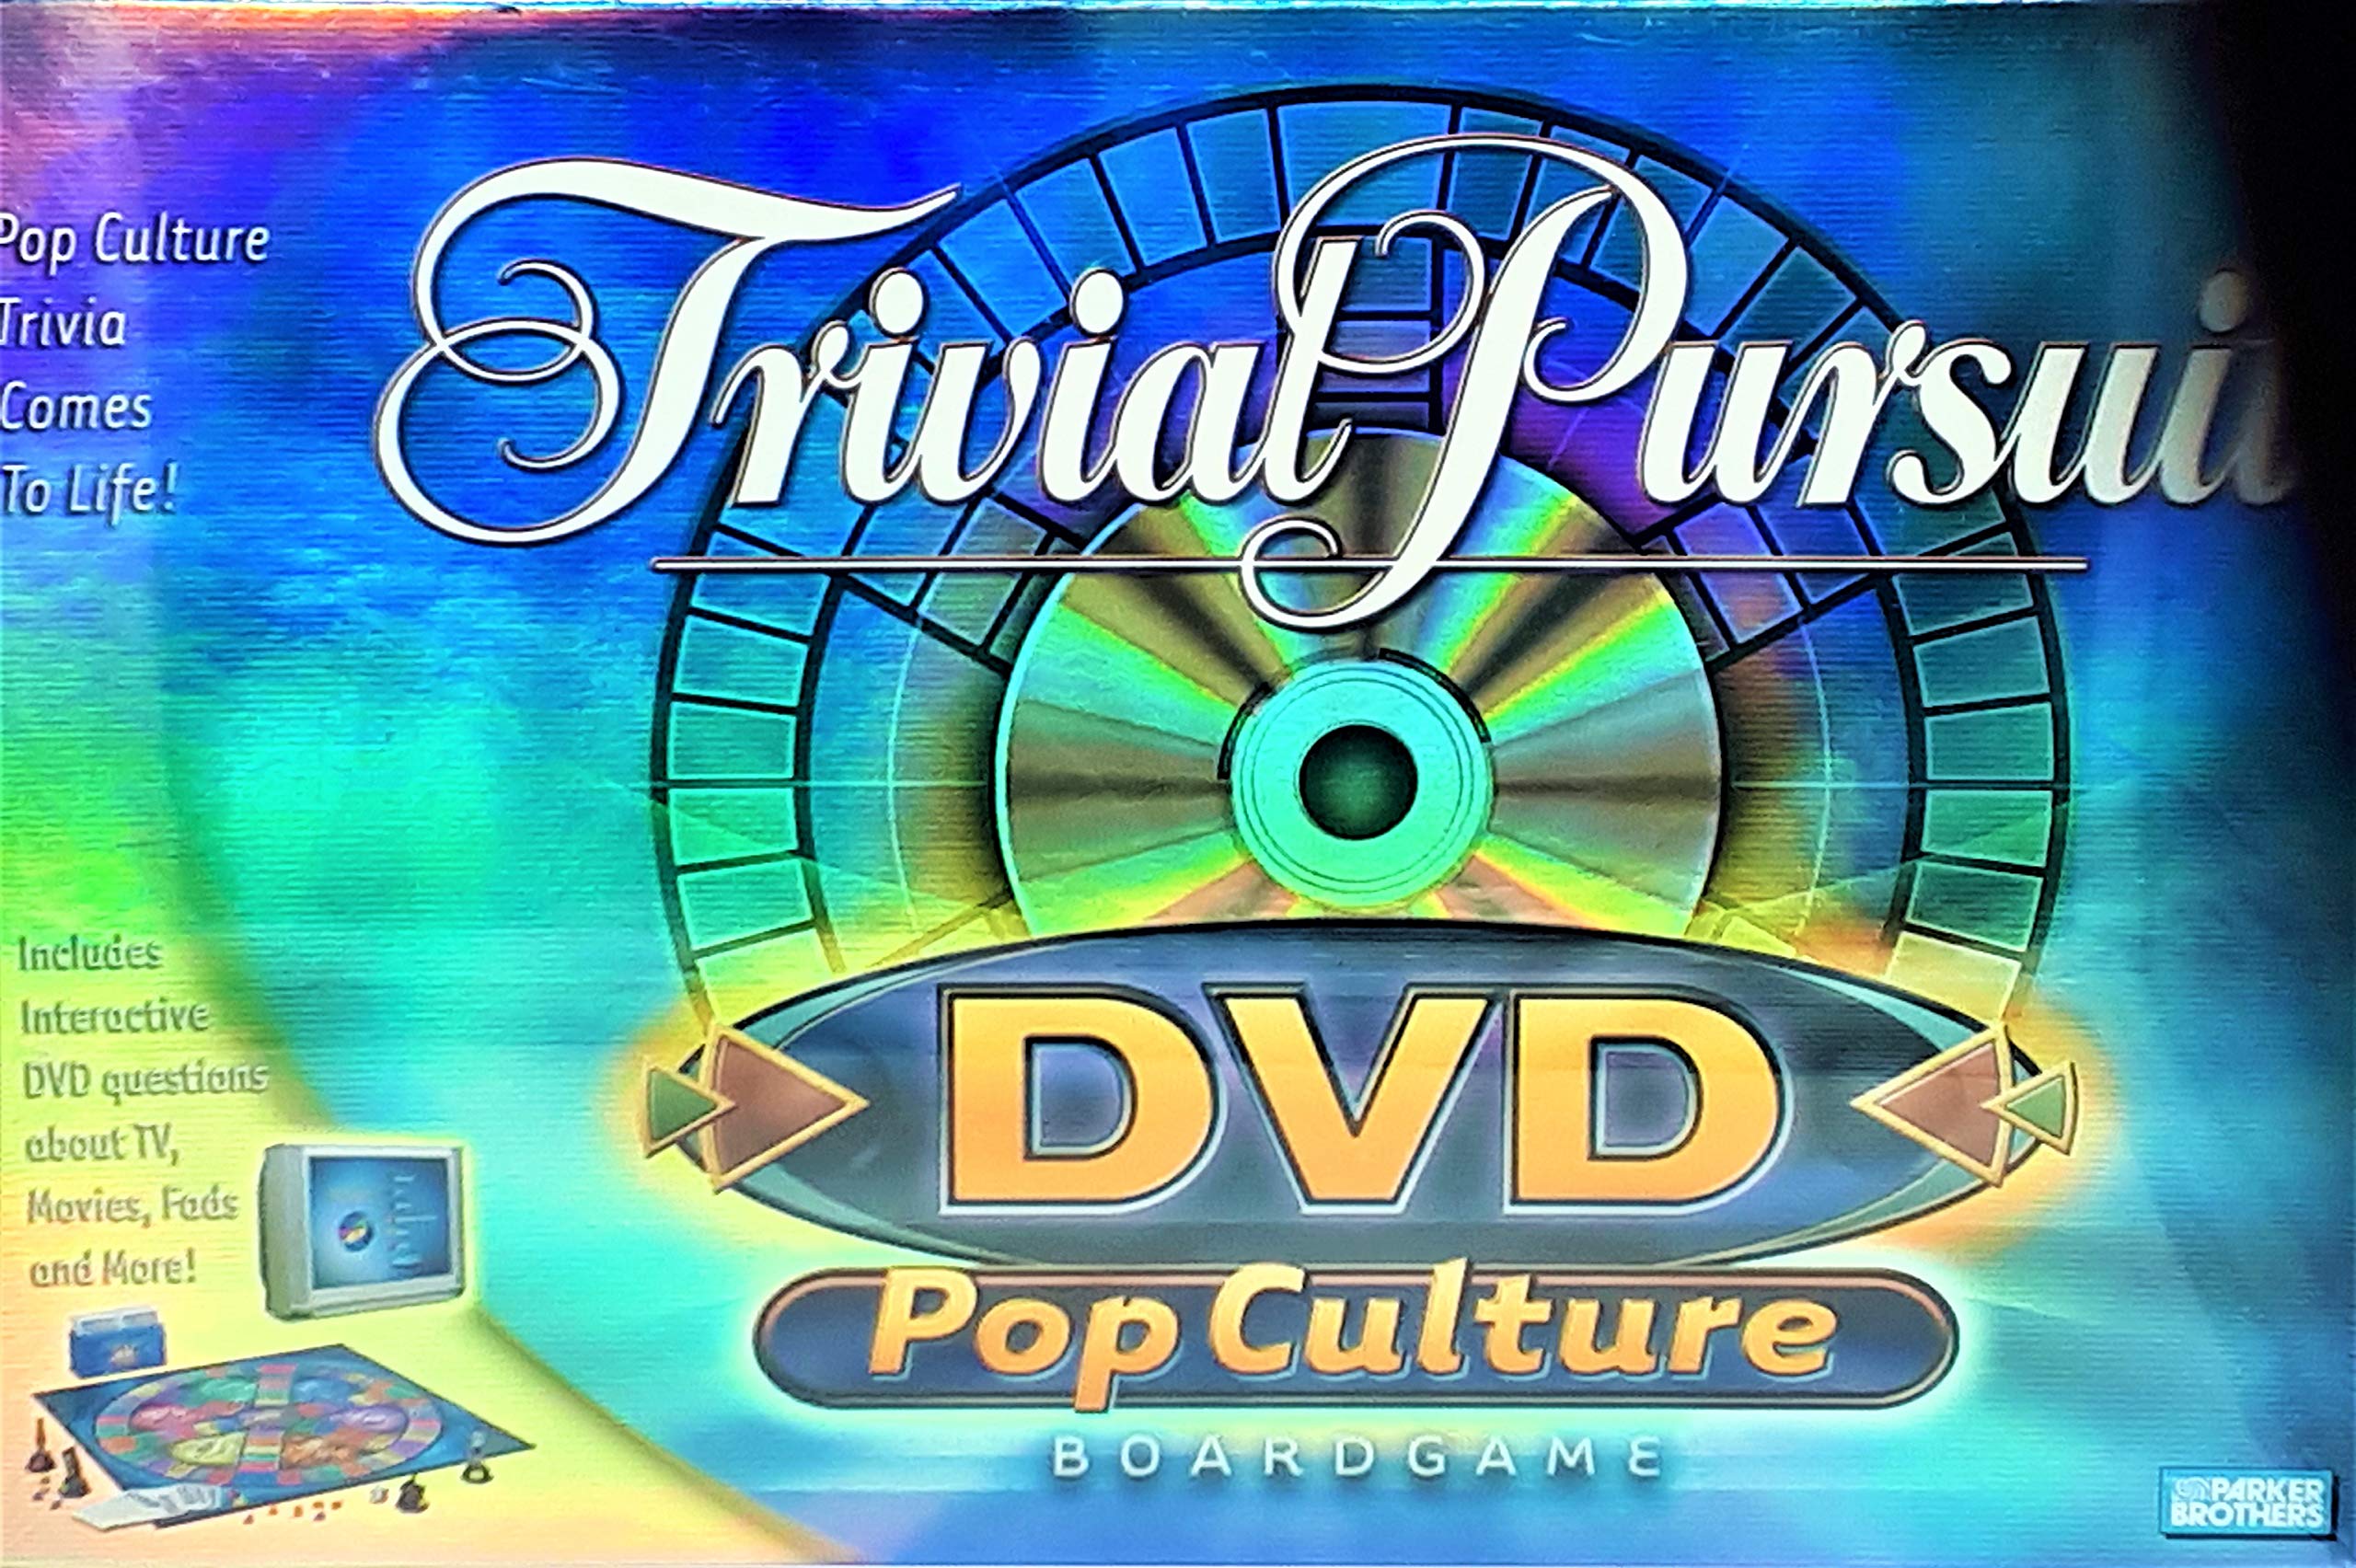 Trivial Pursuit Pop Culture DVD Trivia Game